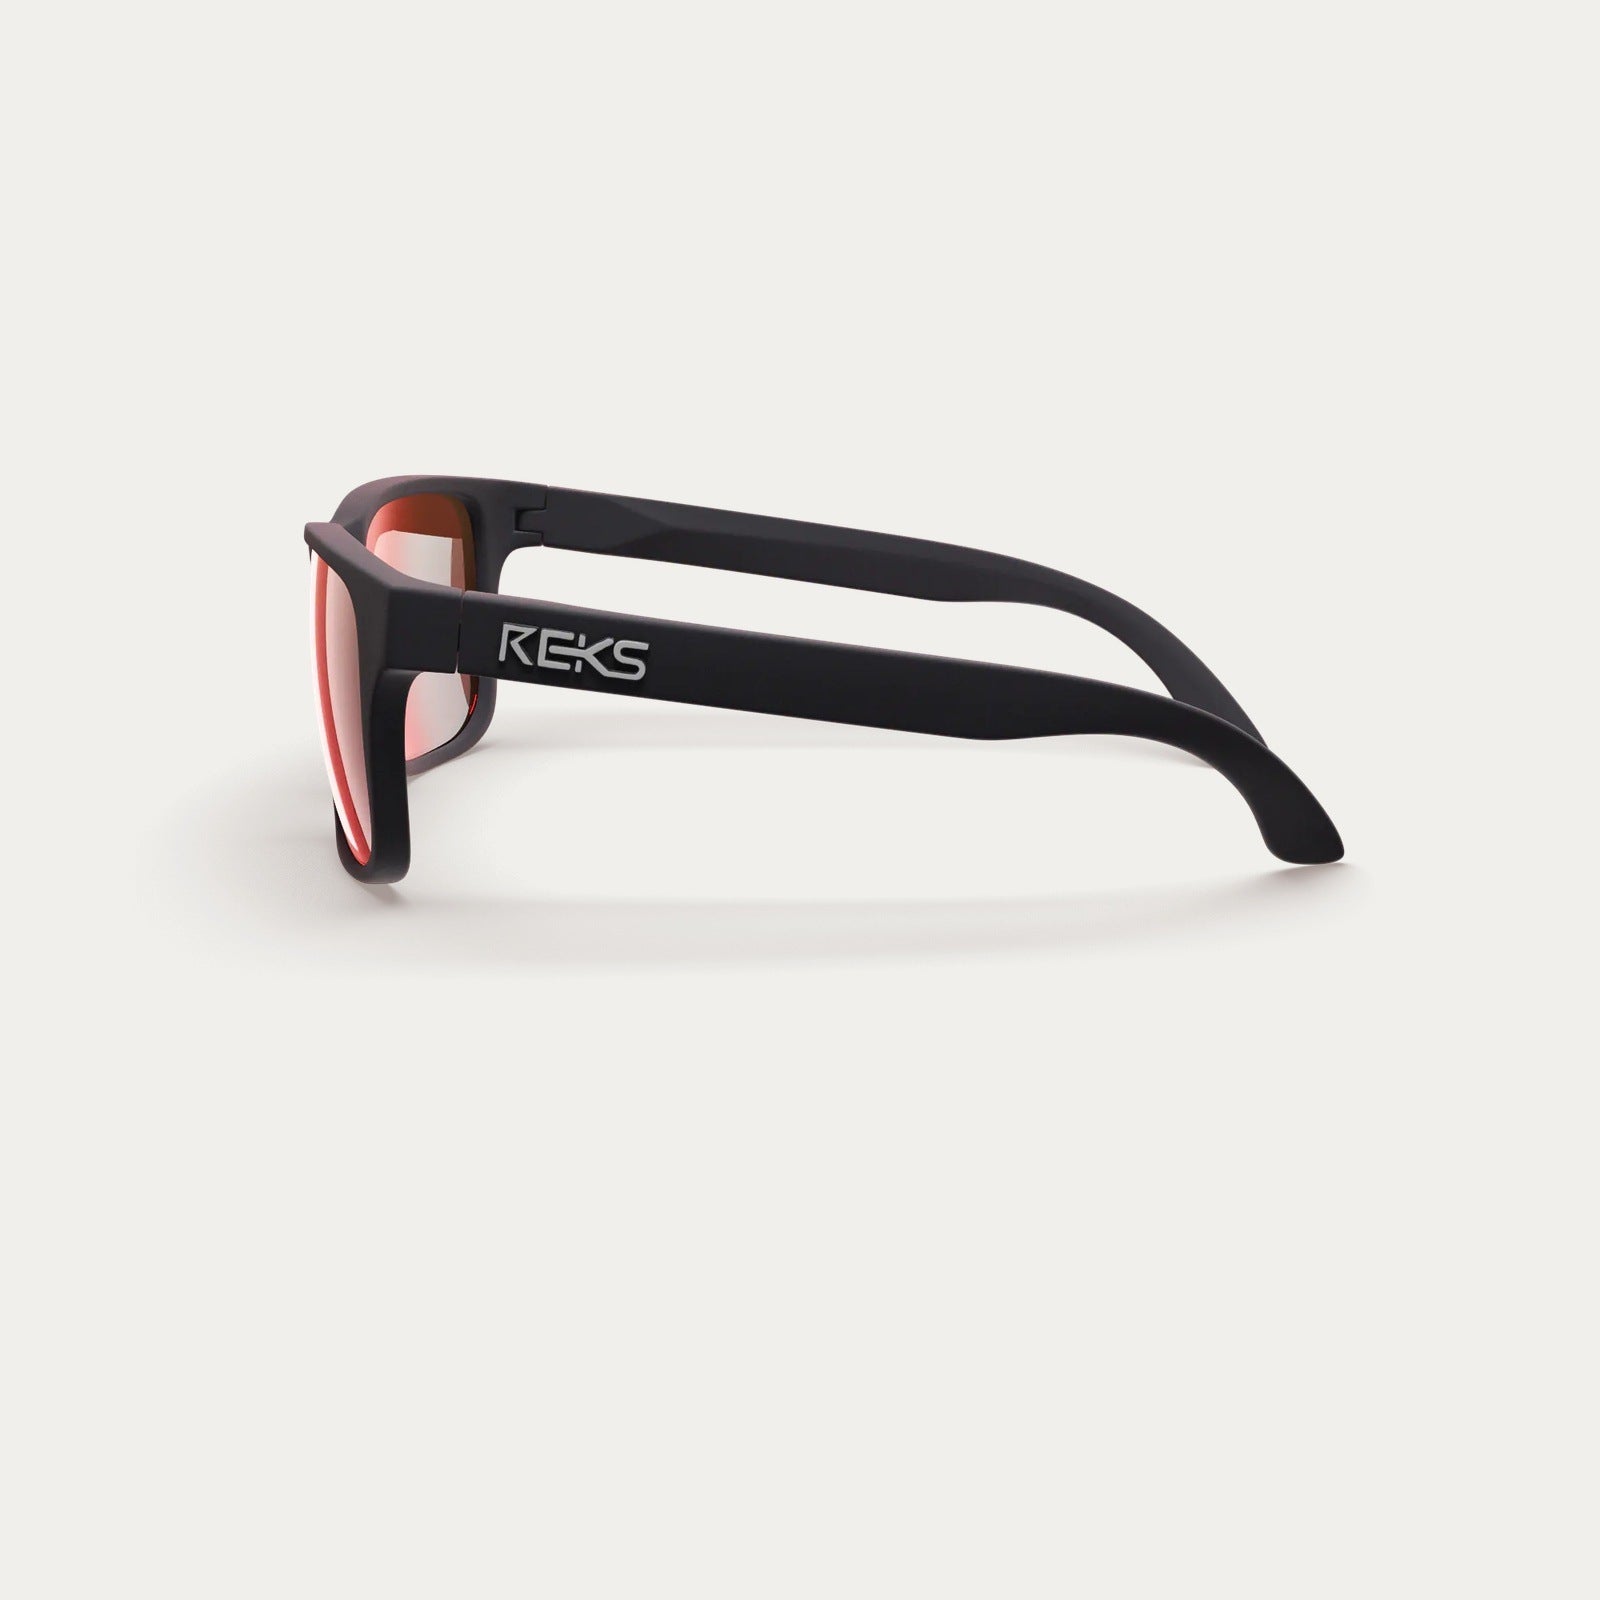 Trivex® Polarized Unbreakable sunglasses with anti-reflective